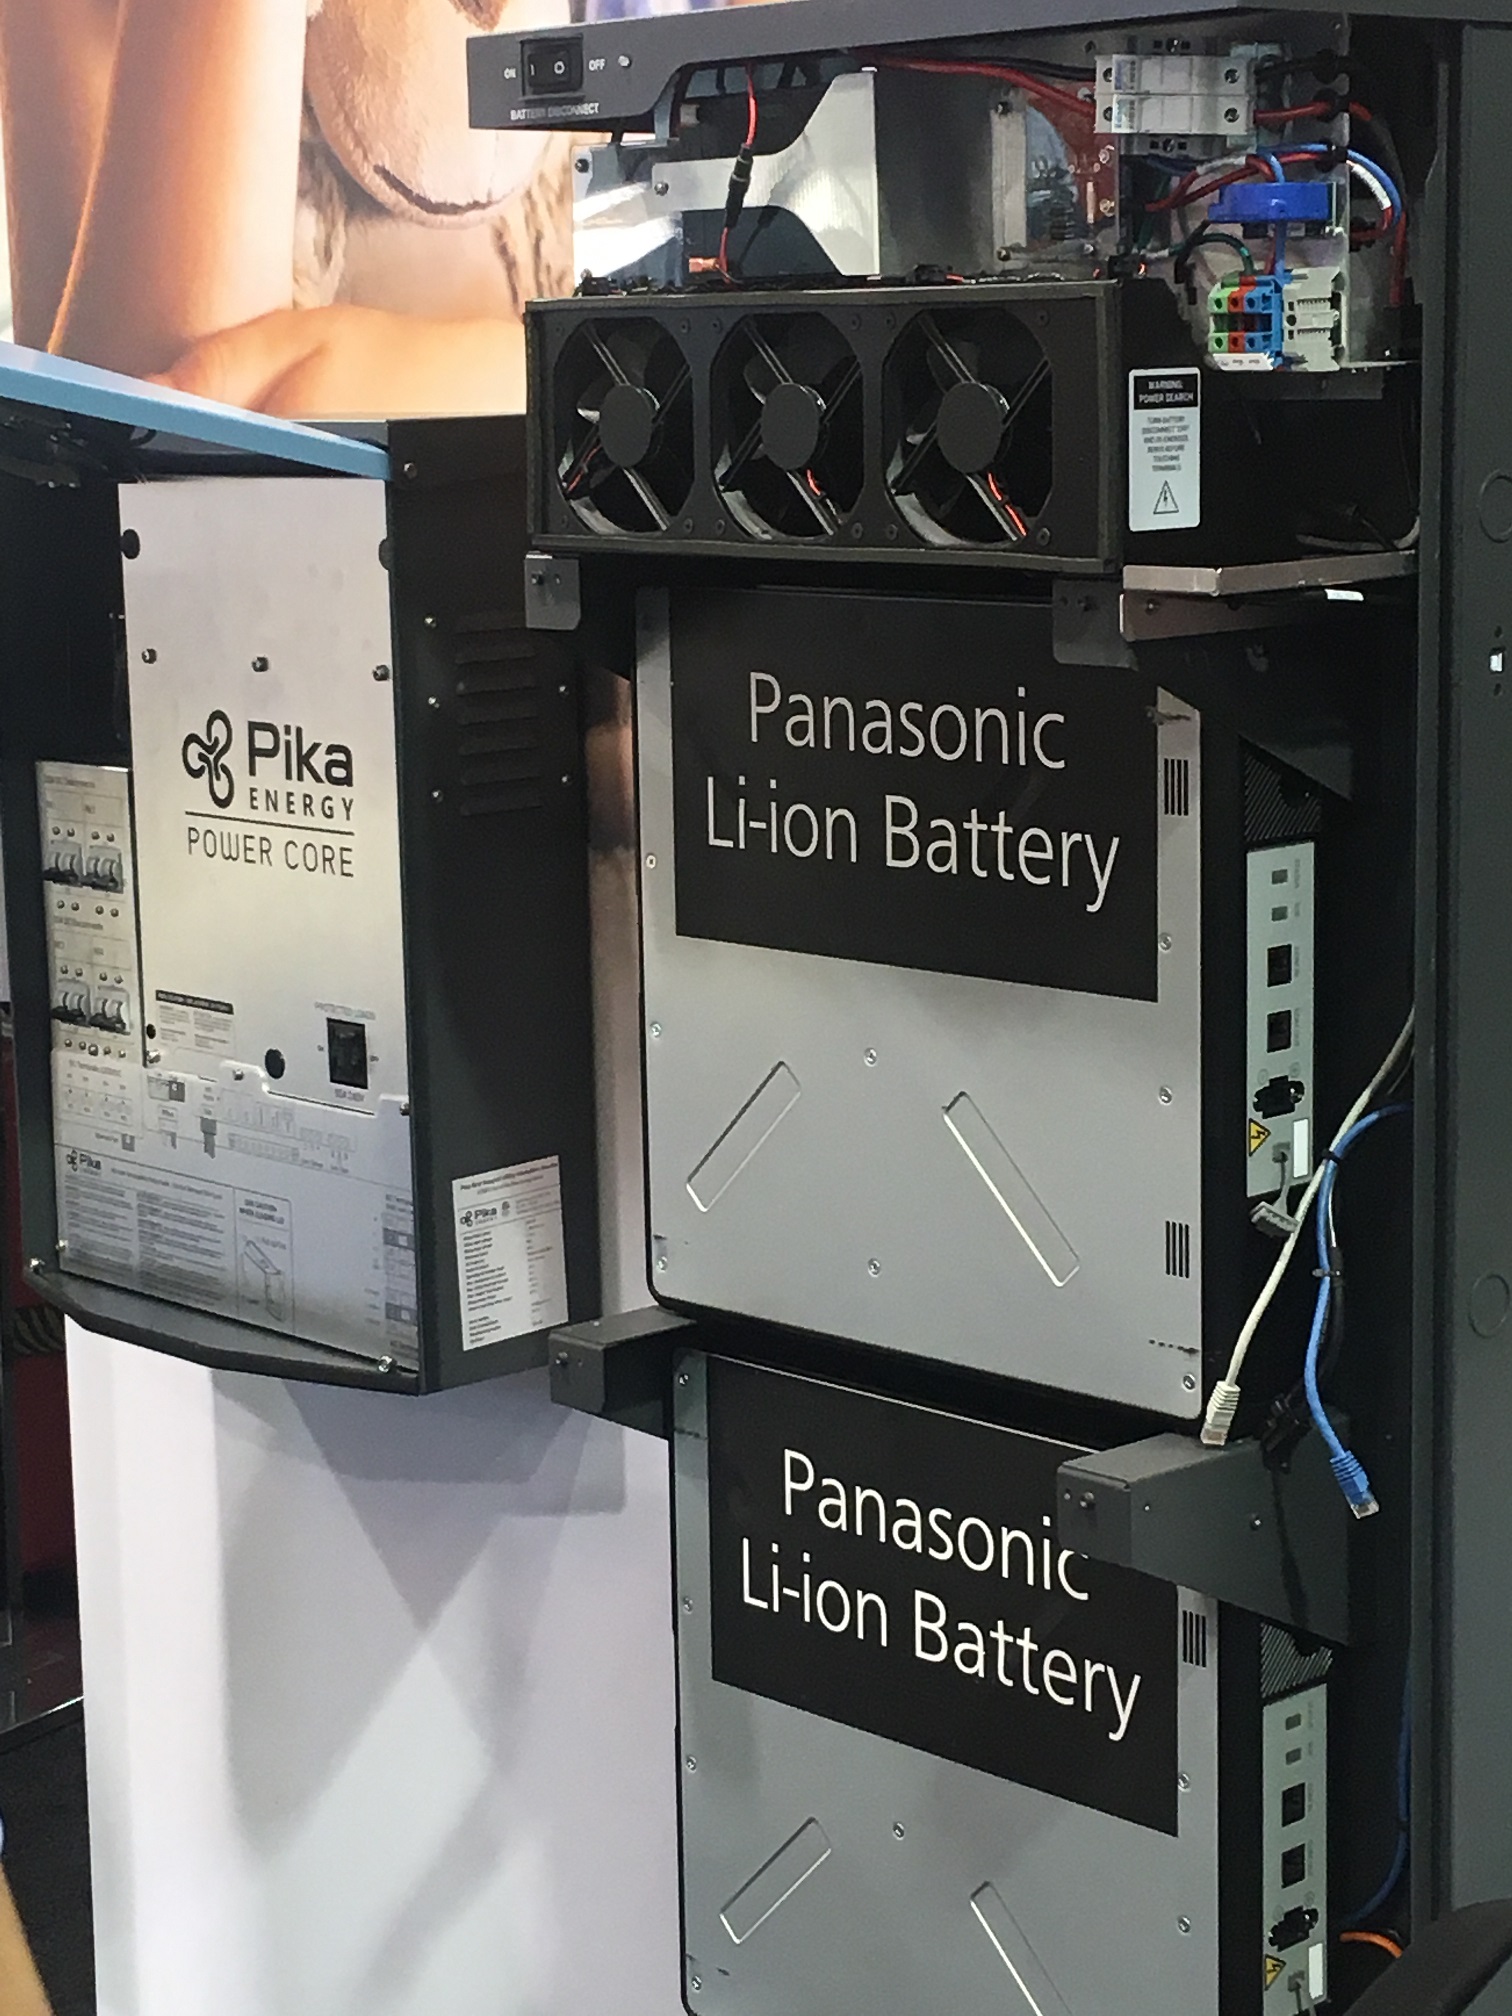 Generac buys up Panasonic US inverter partner Pika - Energy